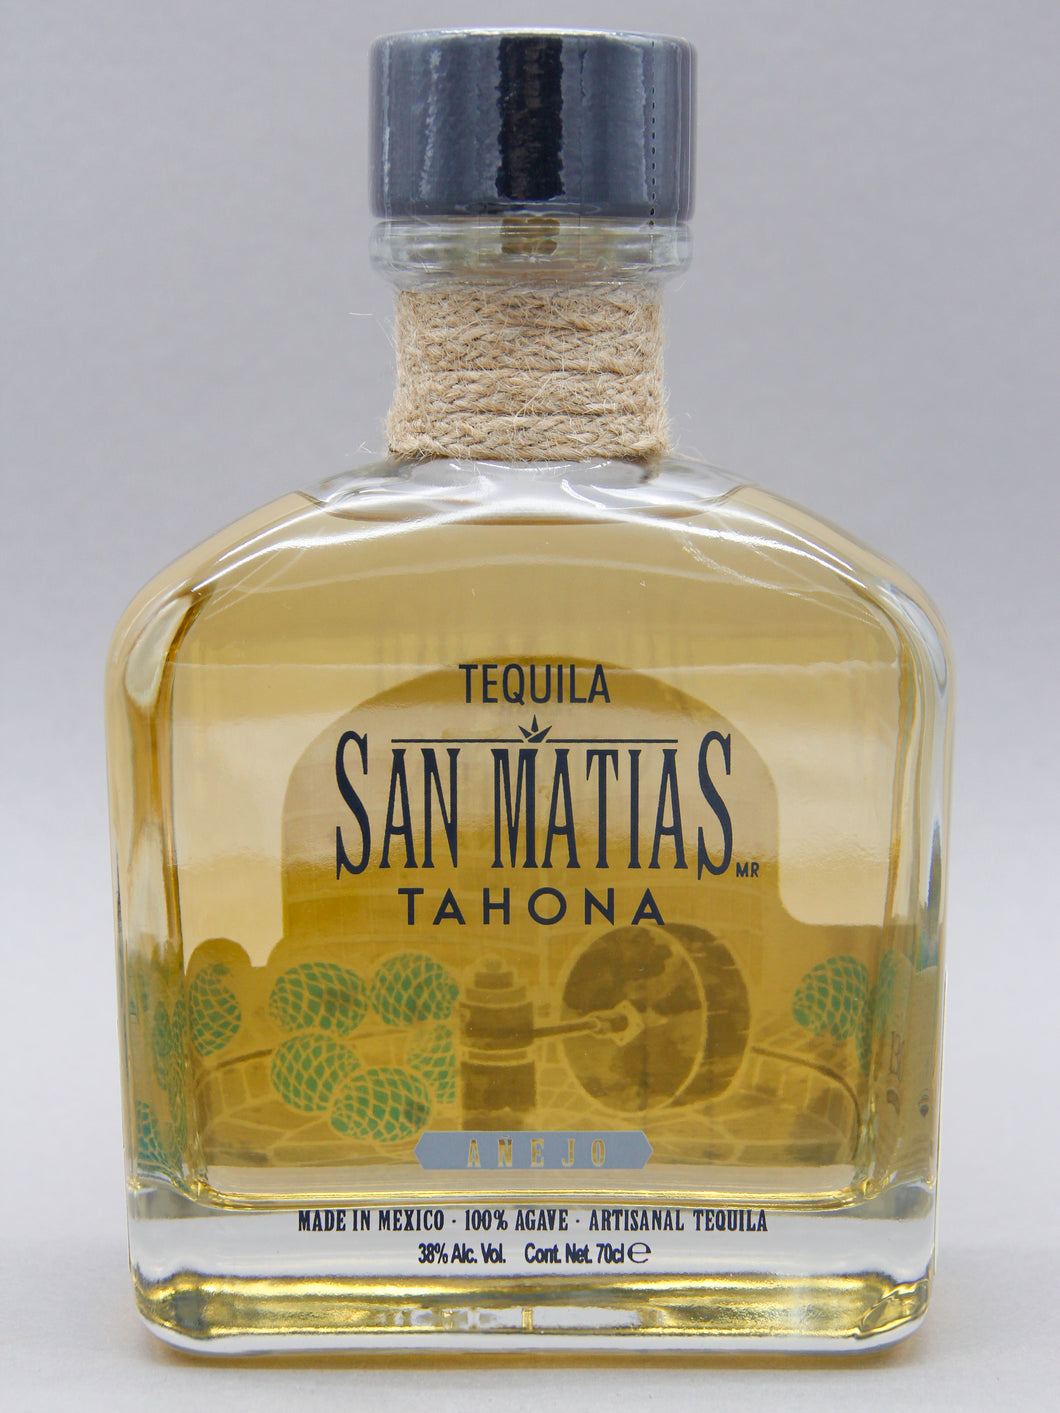 San Matias Tahona, Tequila Anejo (38%, 70cl)